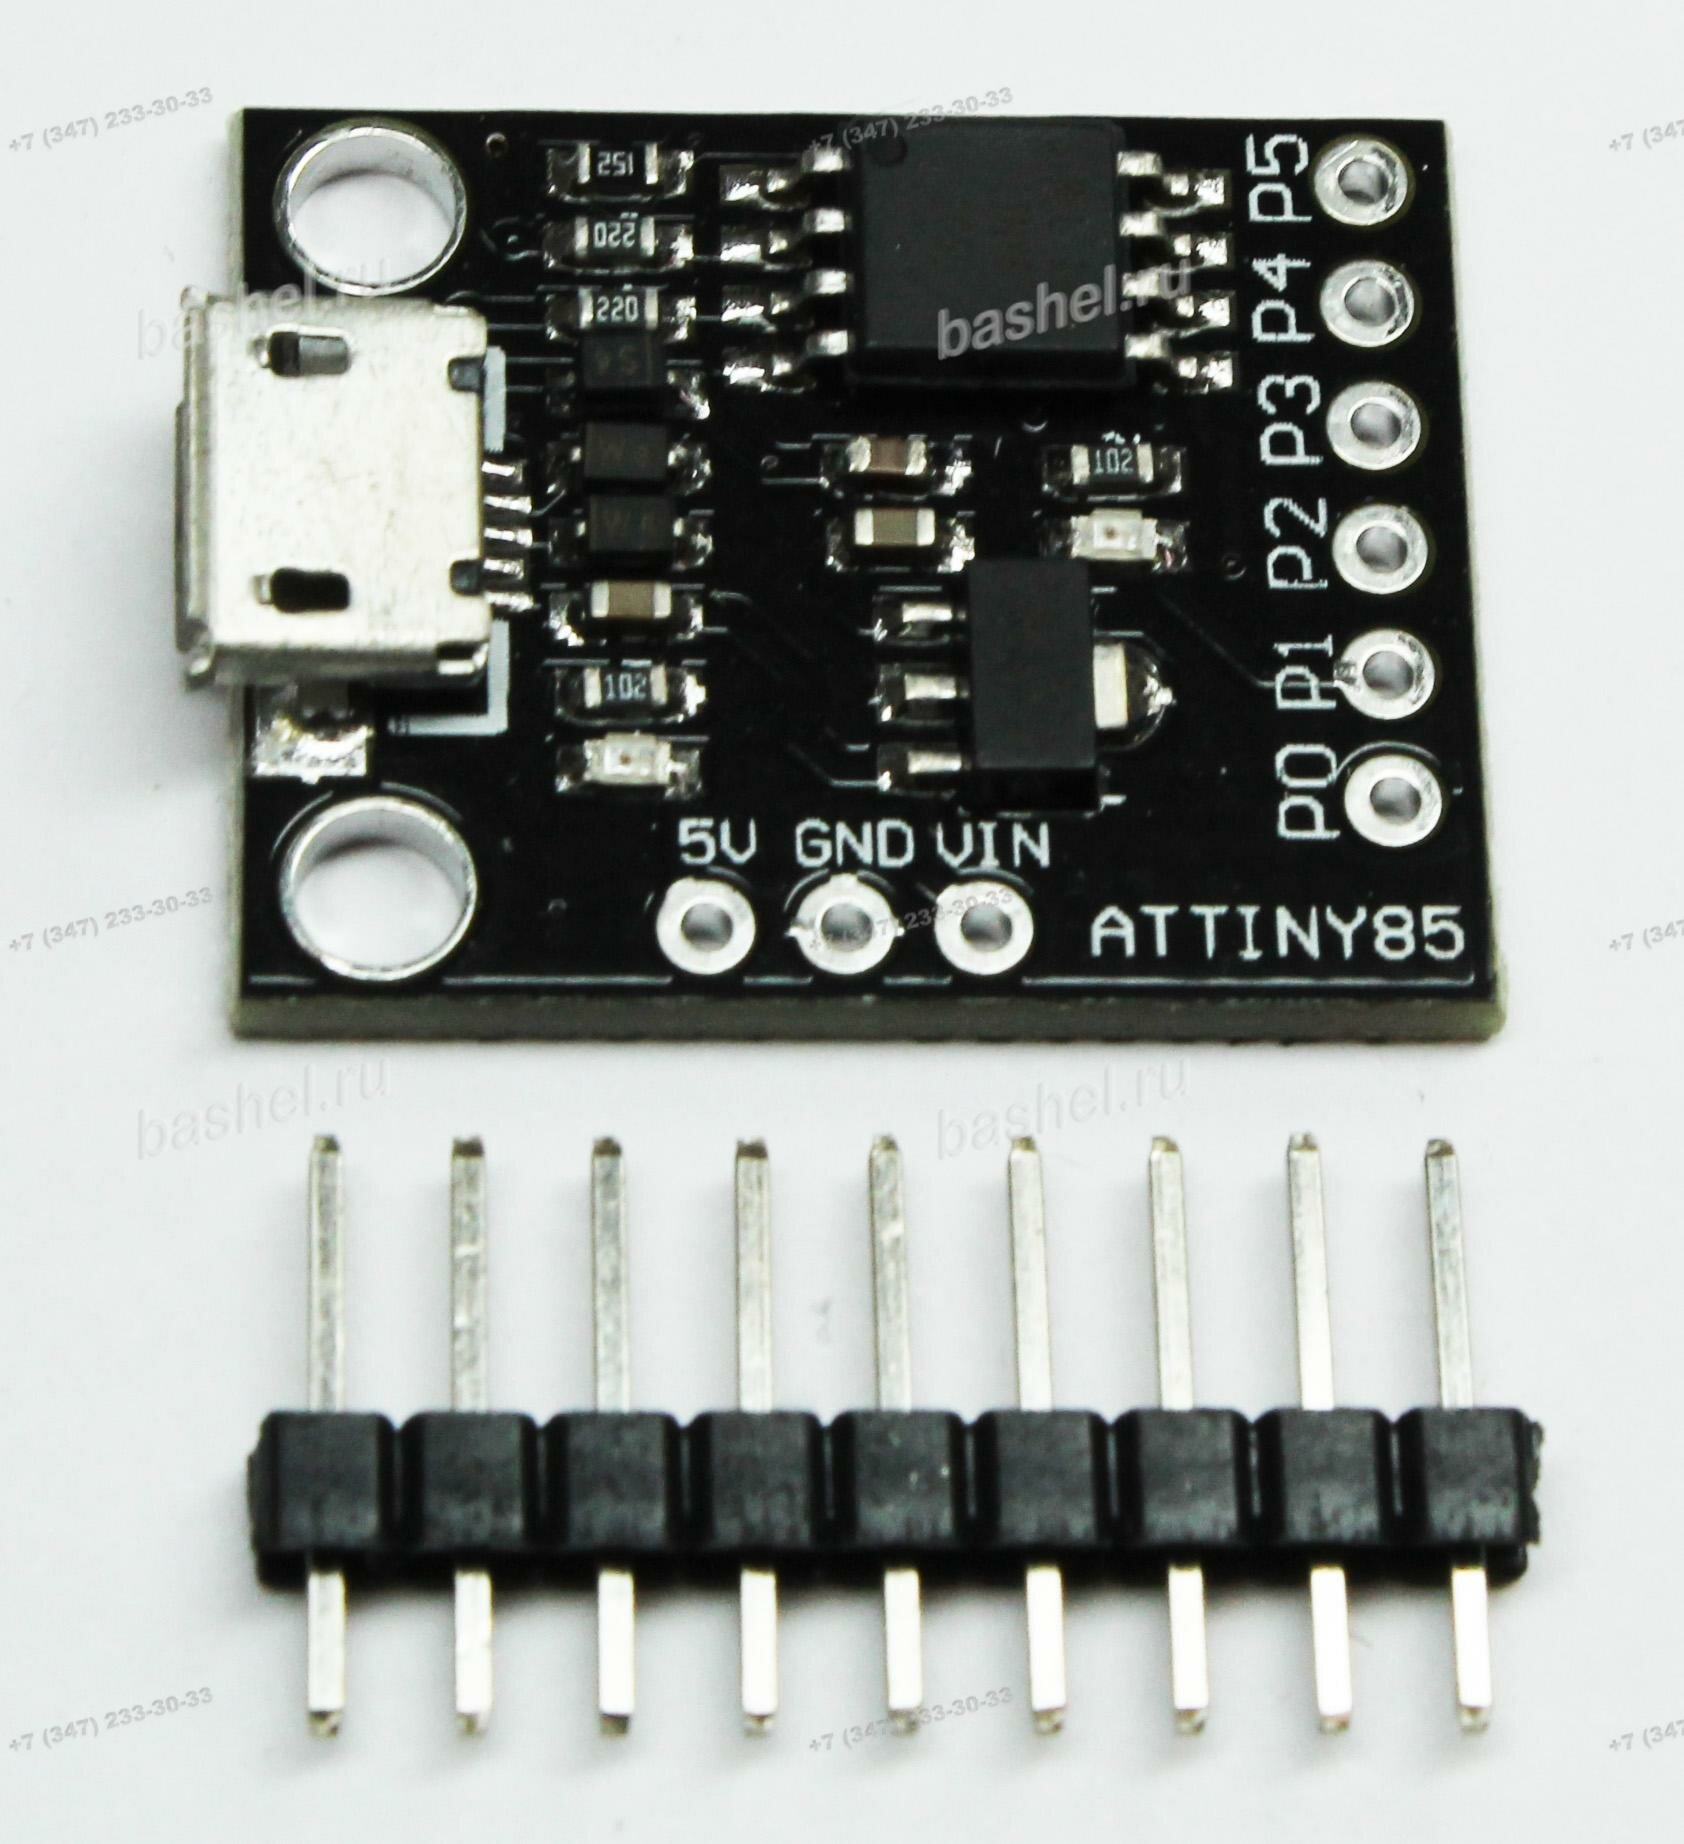 Digispark ATTINY85 Micro USB Встраиваемый МК модуль на базе МК ATtiny85 электротовар